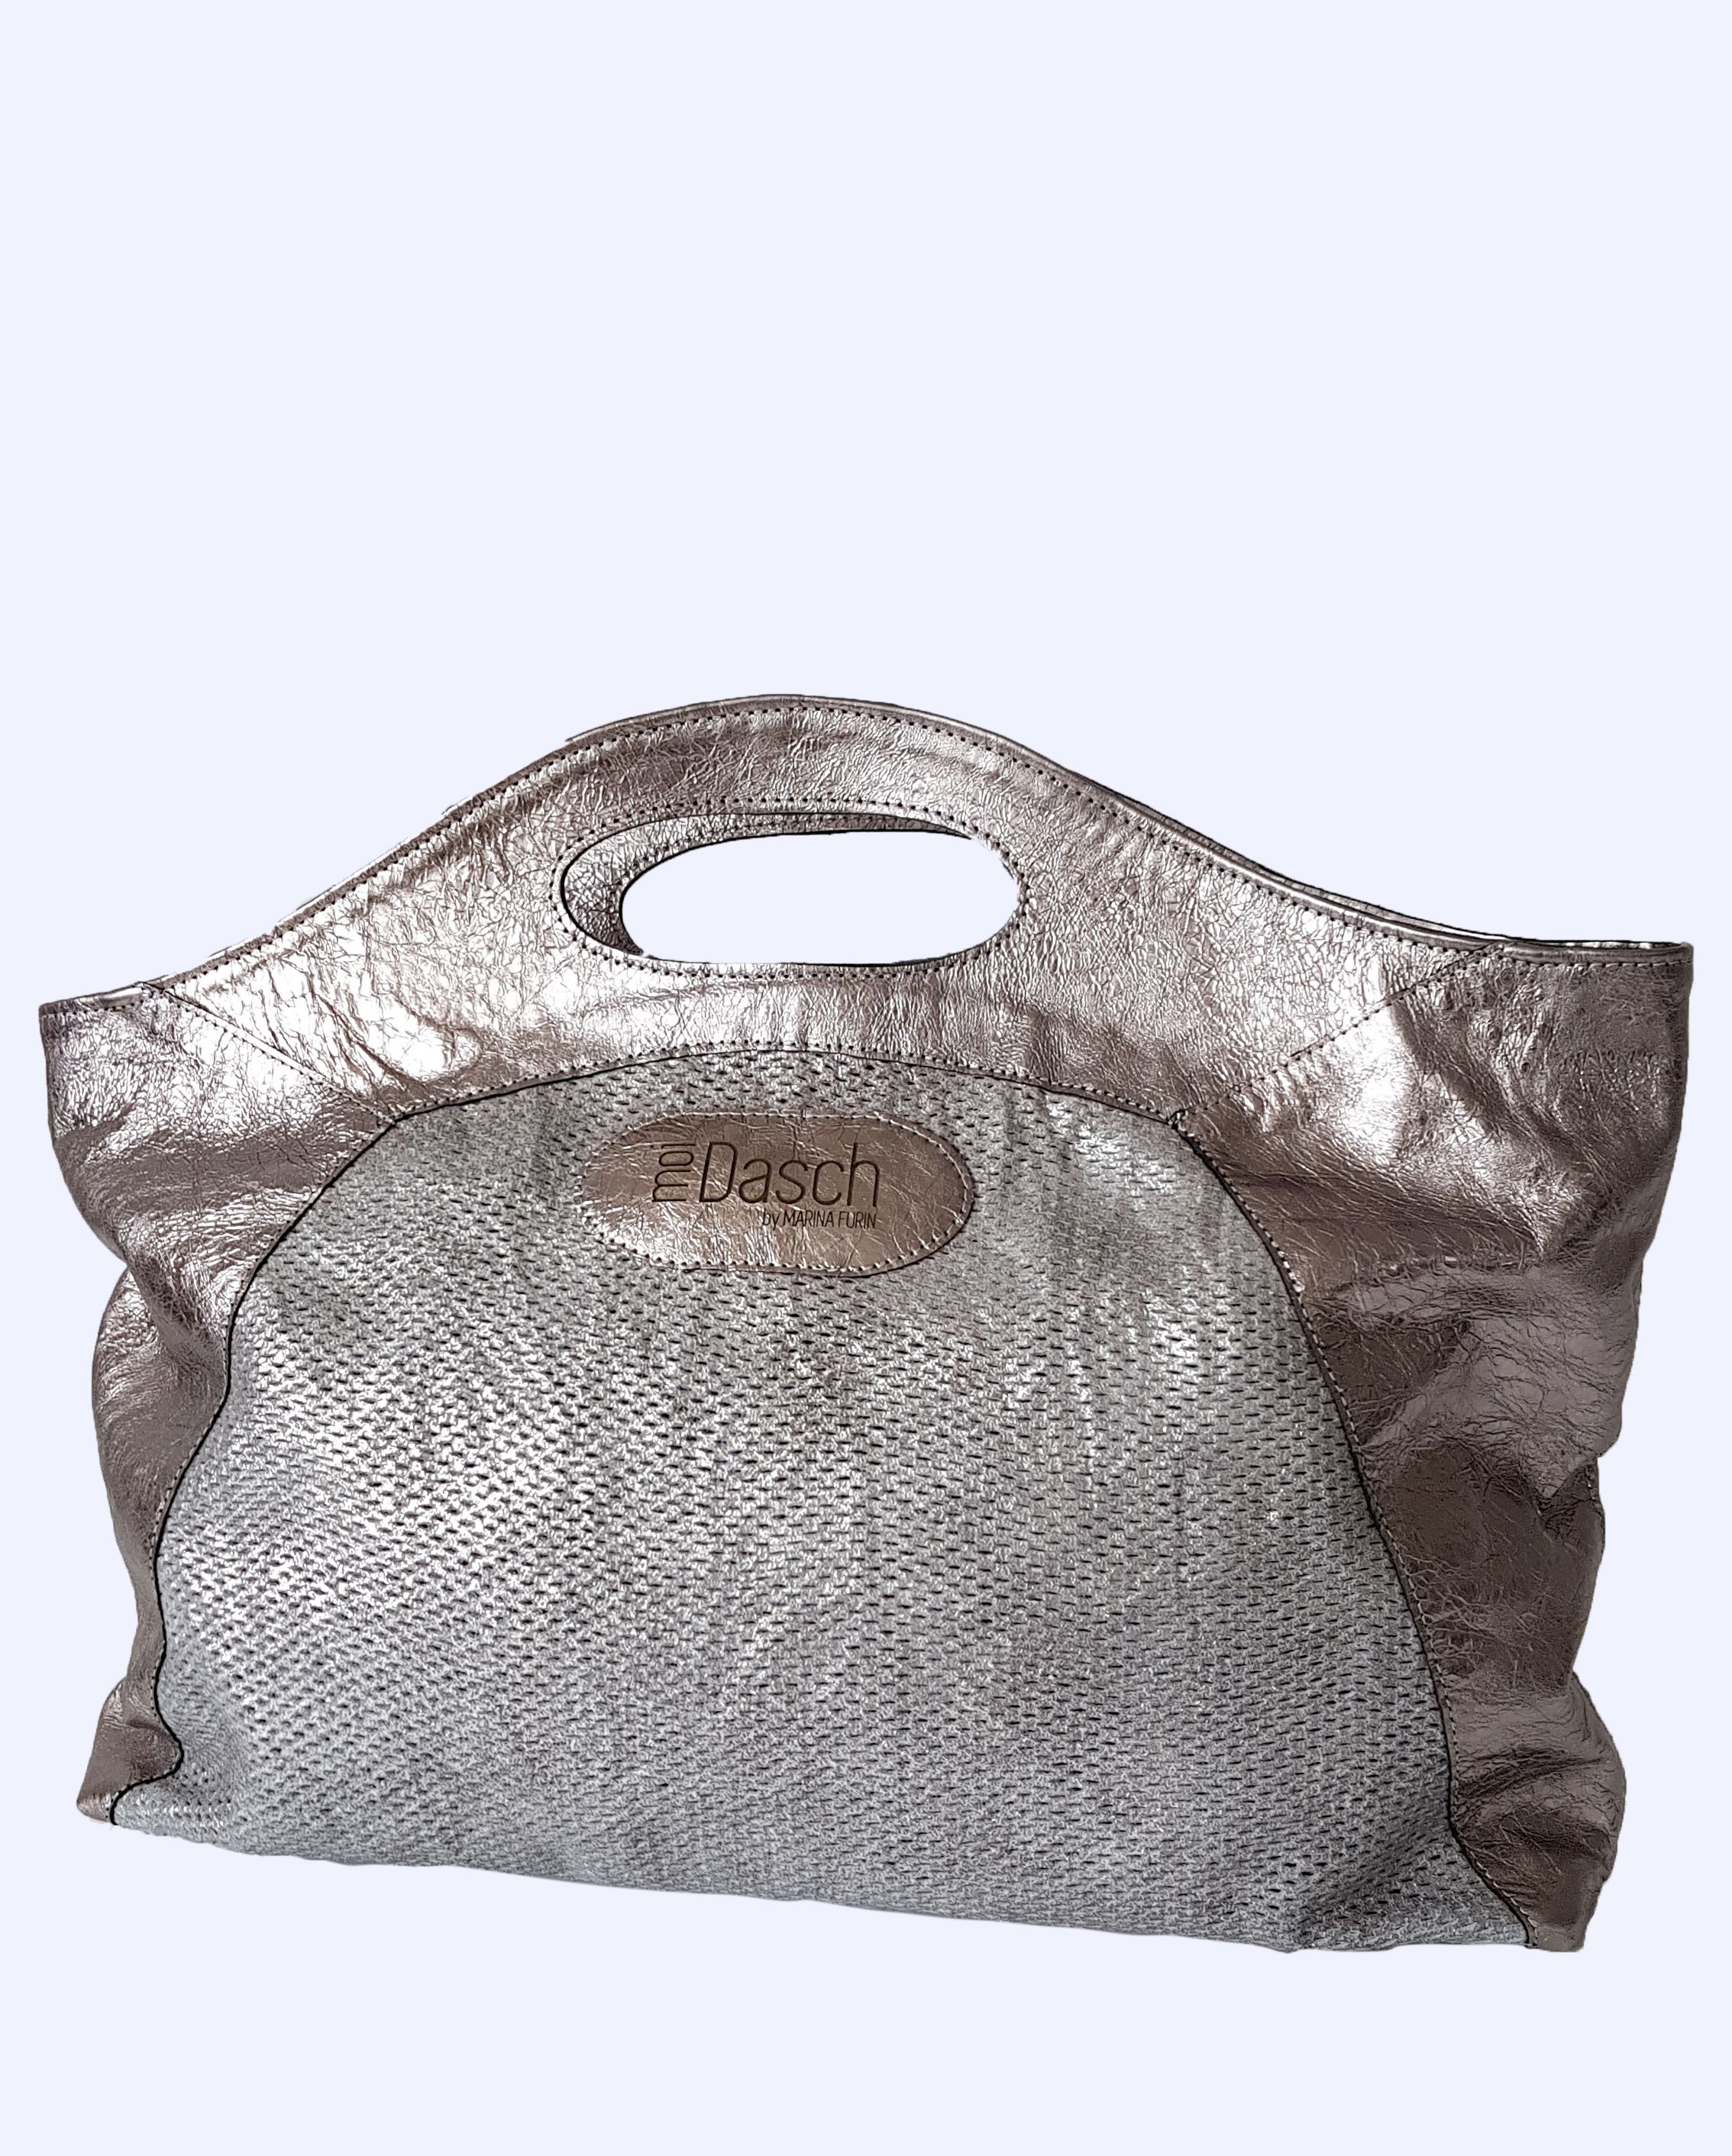 Marina Furin Berlin Künstlerin Designerin Lederskulpturen Taschen Accessoires Kunst Bags Jewelry Art Leathersculpture Silver Sun